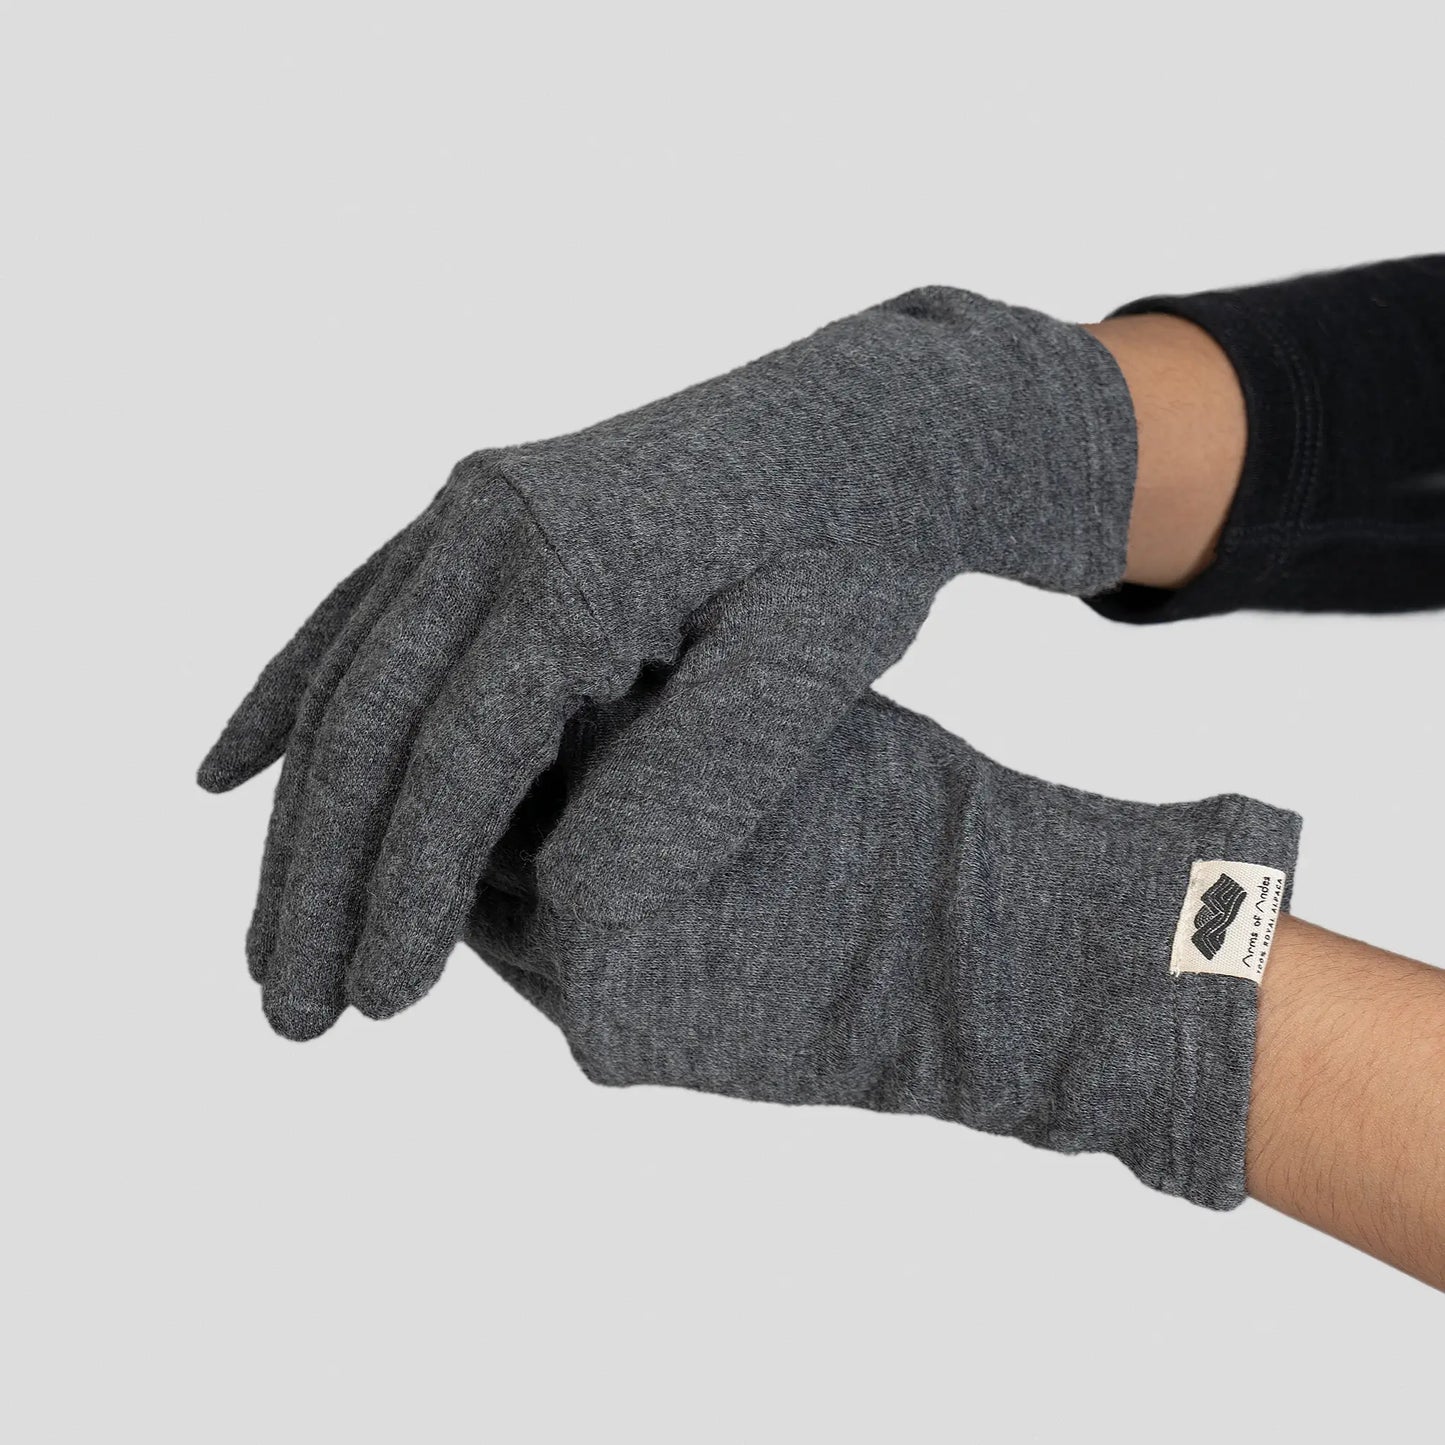 warmest gloves lightweight color gray